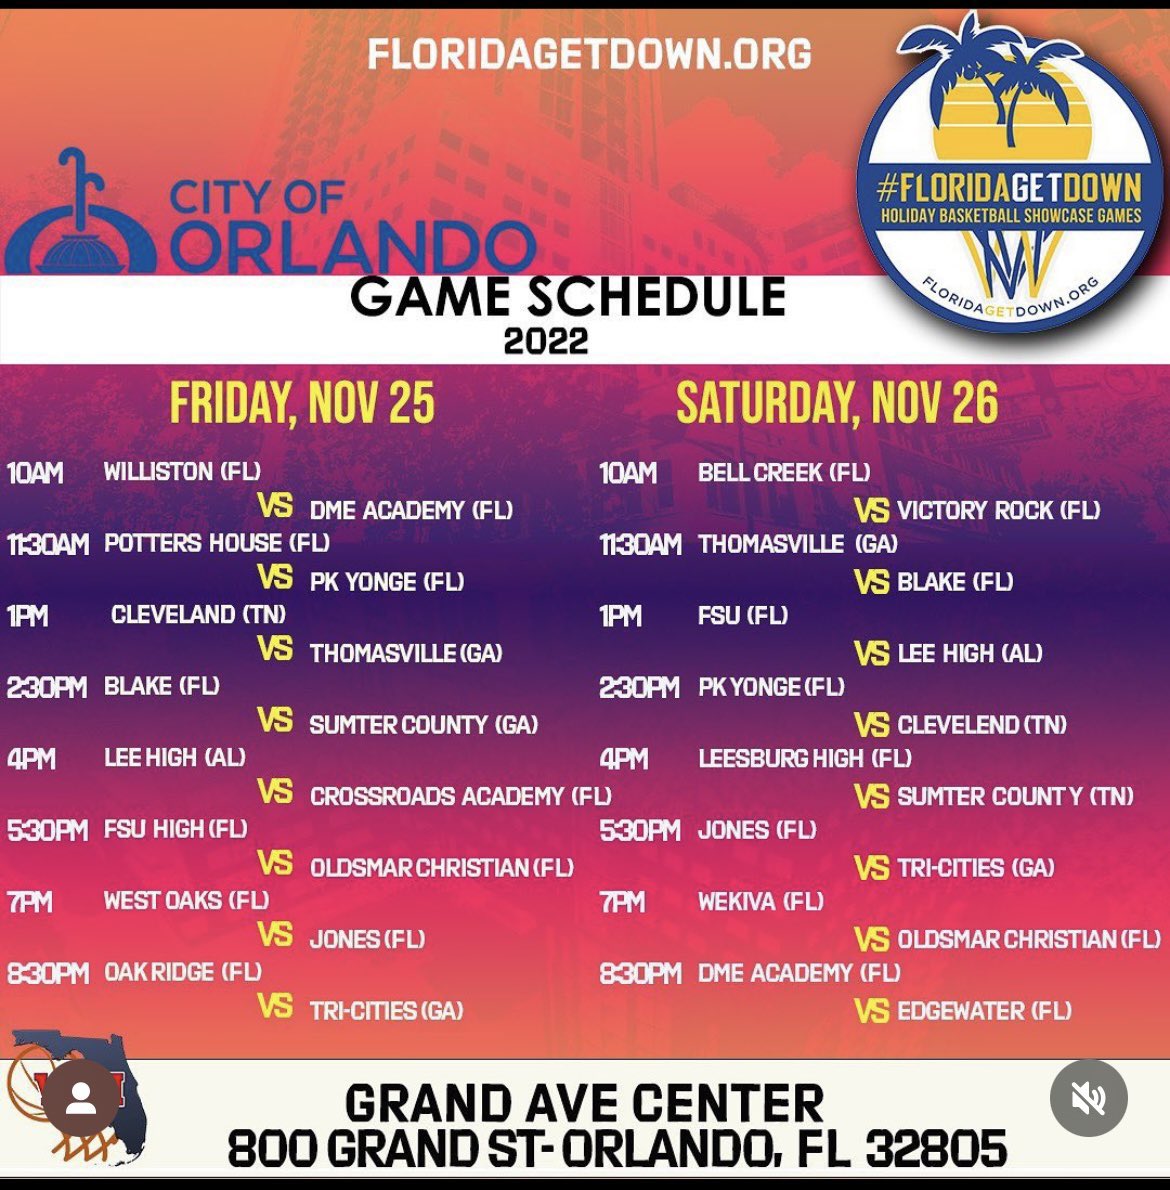 The 2022 Florida GetDown Holiday Basketball Showcase (Grand Avenue Center, Orlando, FL)

Final

Jones HS (FL) 55
Tri-Cities HS (GA) 66

Norrico Danner (Tri-Cities) led all scorers with 25 pts

@floridagetdown @TigersJhs @BasketballTCHS 